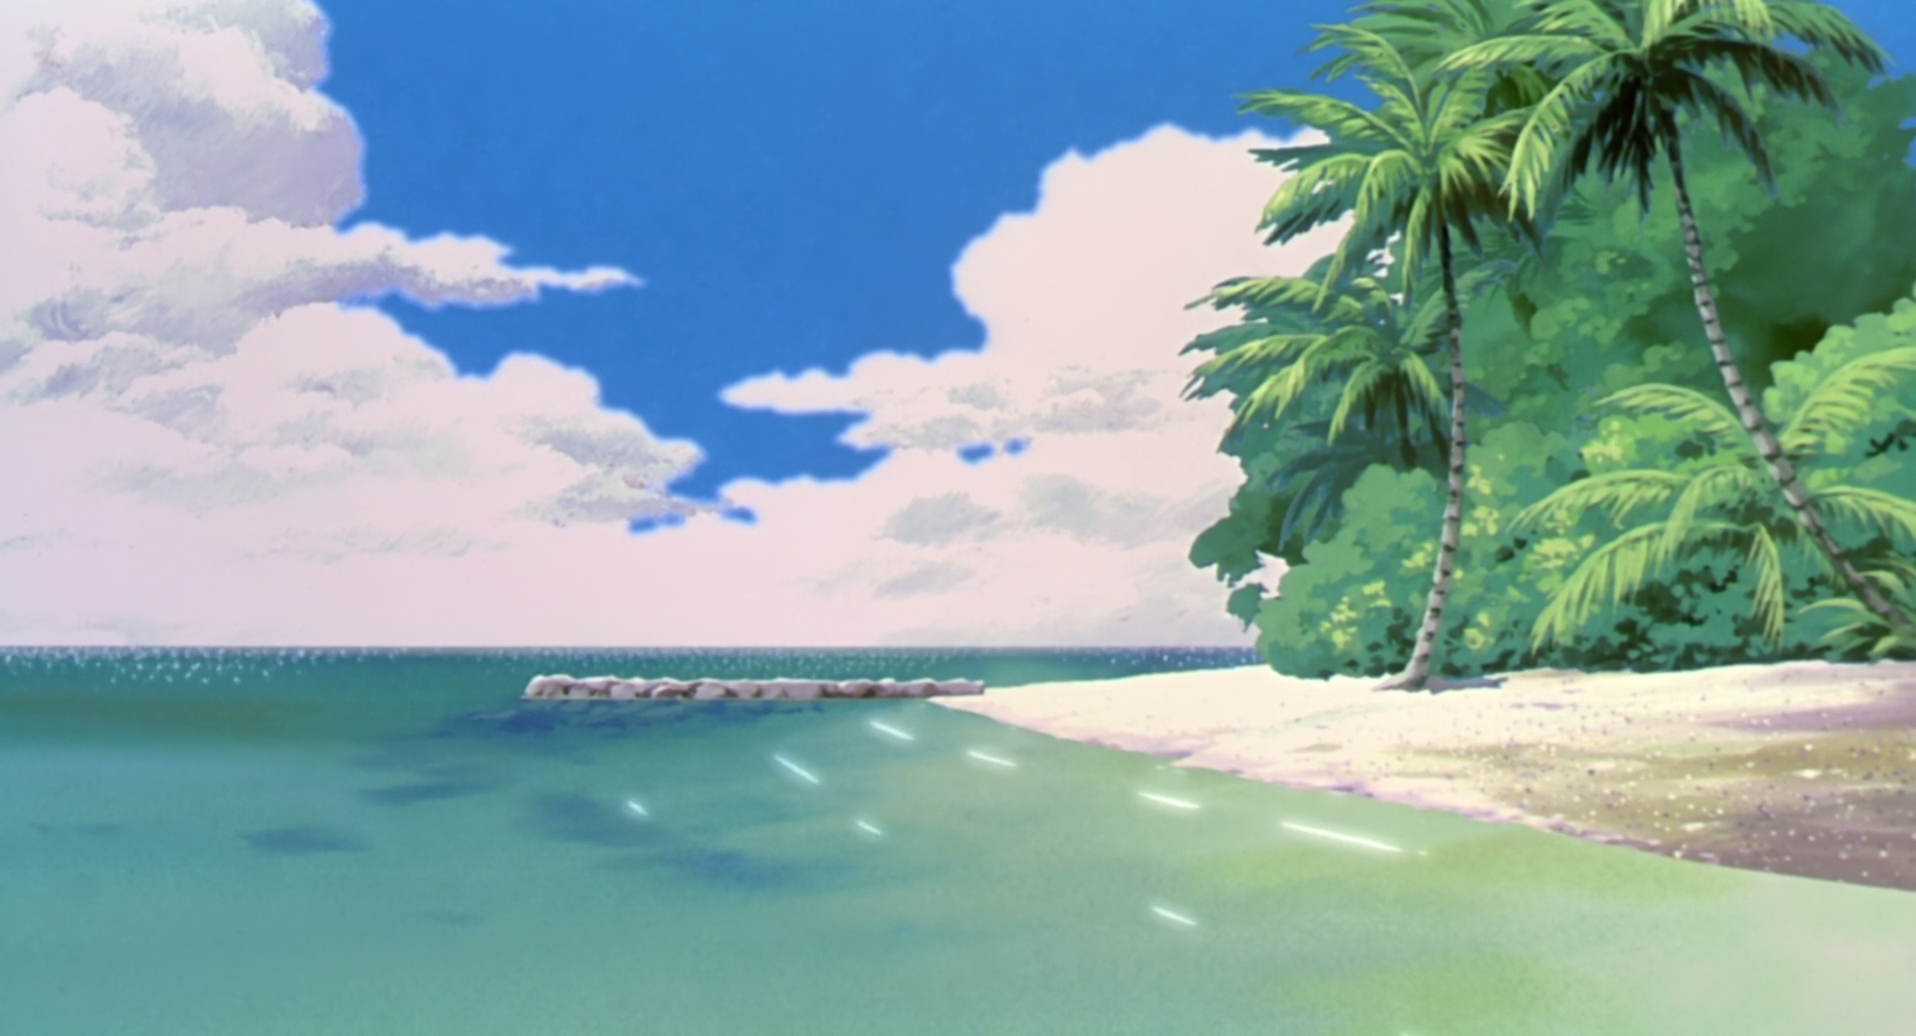 pokemon scenery closeup